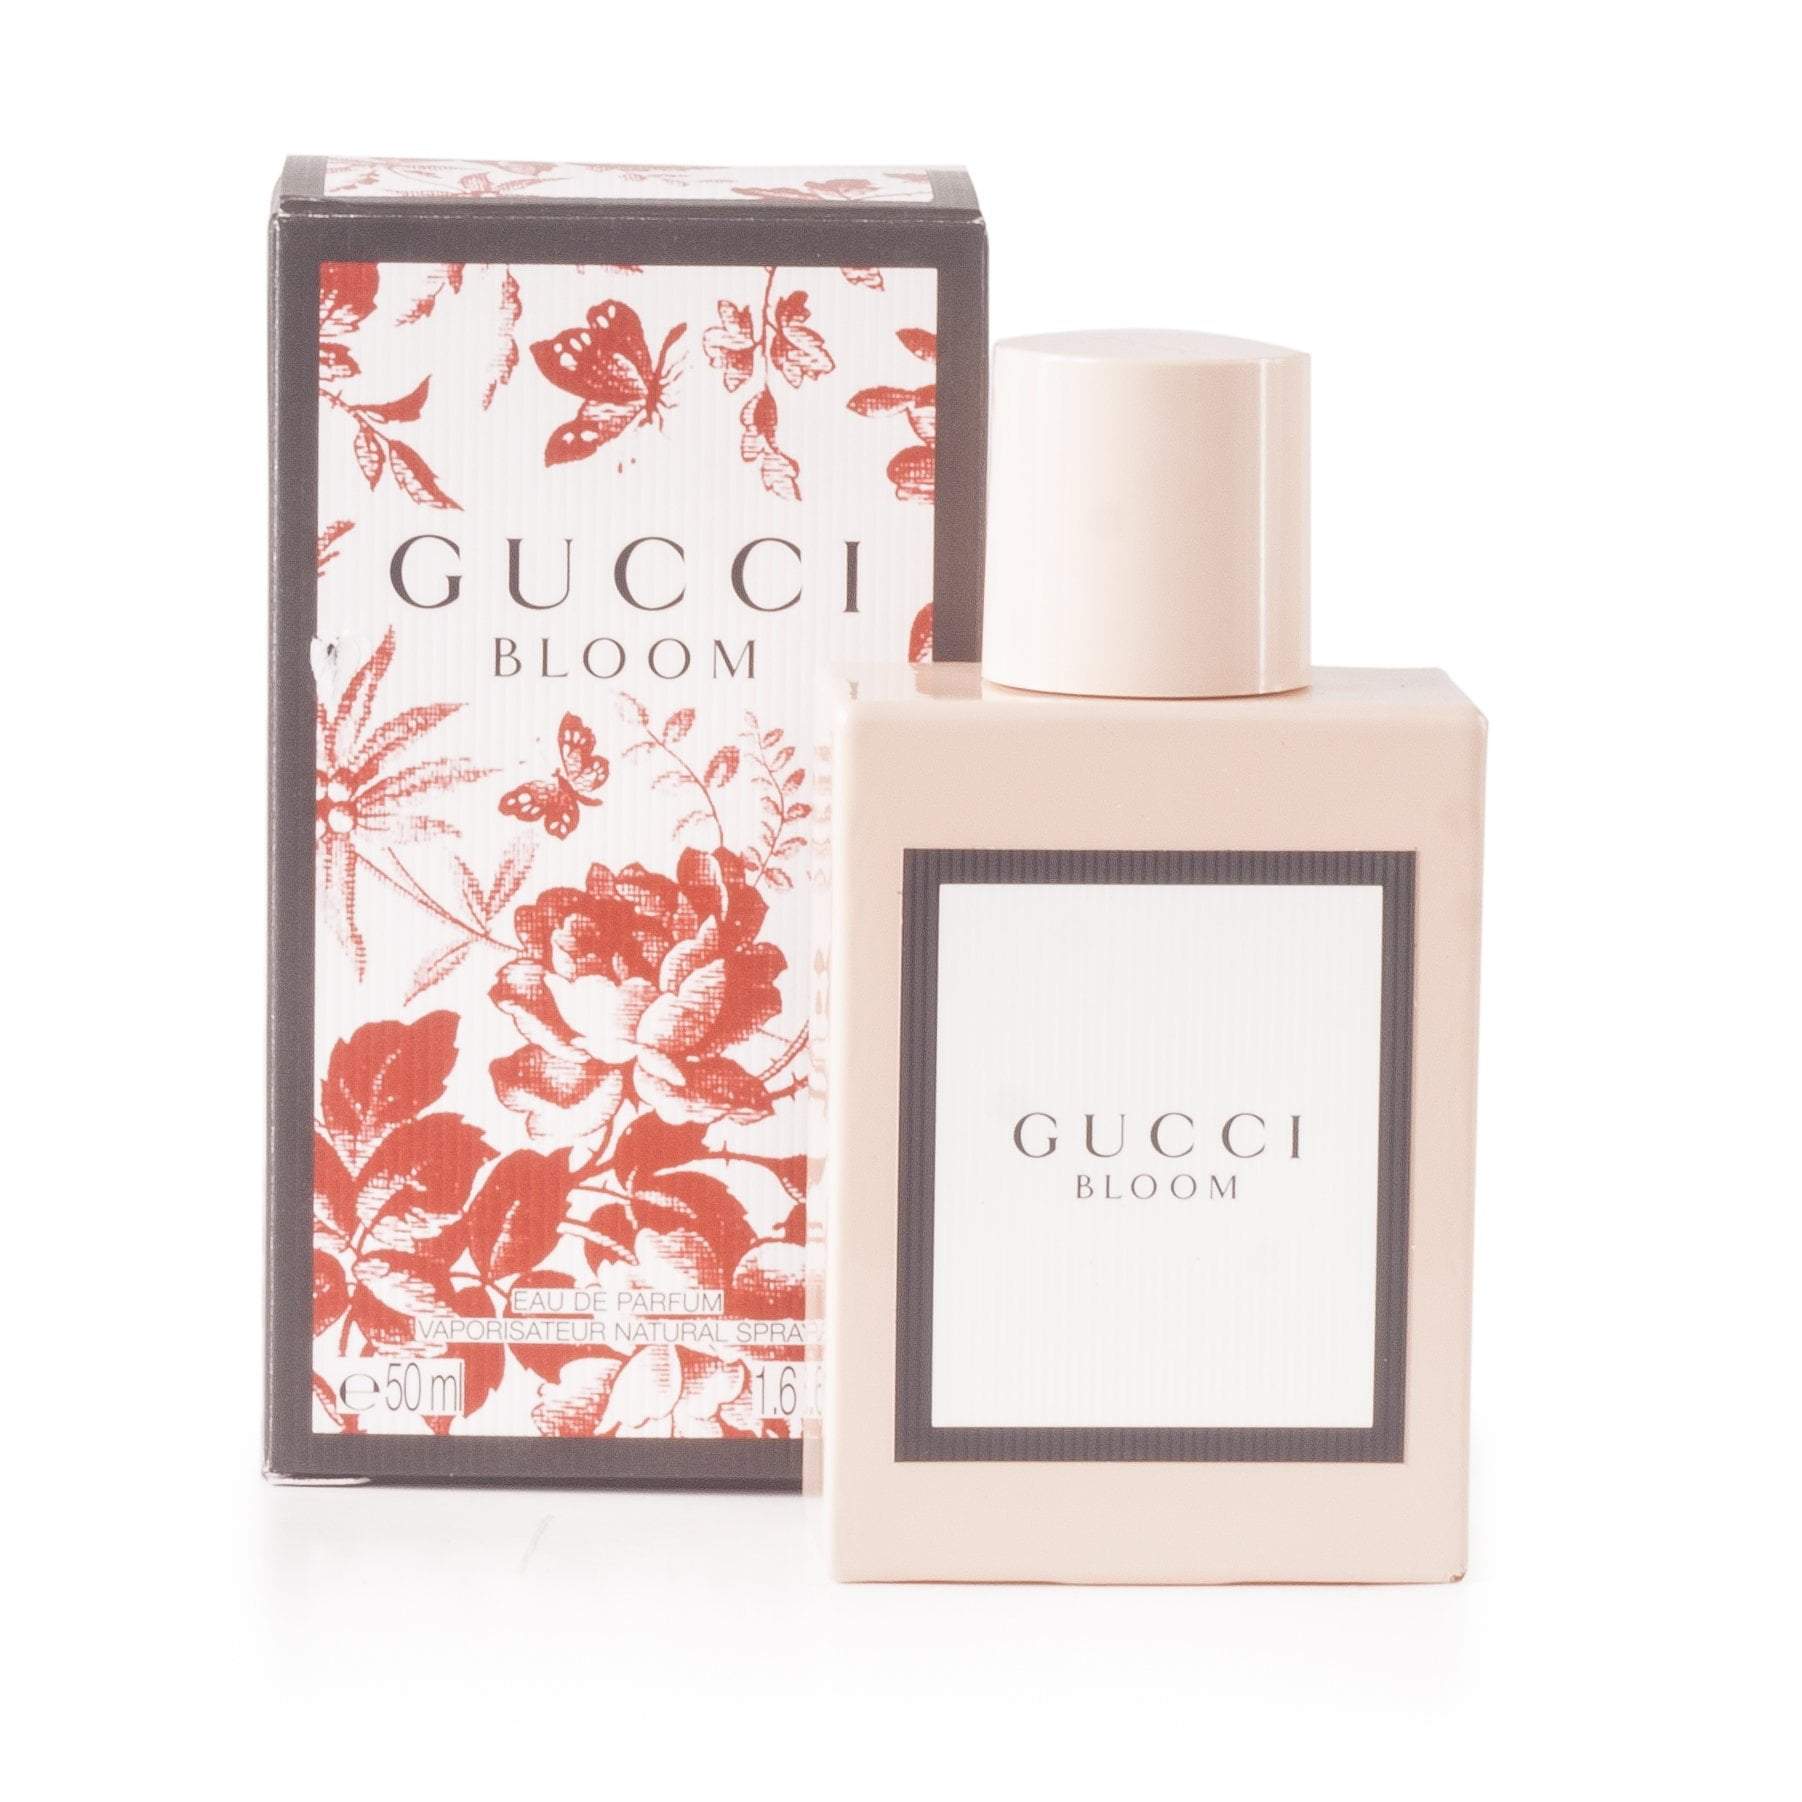 For Parfum Eau By Gucci Perfumania De Bloom Gucci Spray – Women